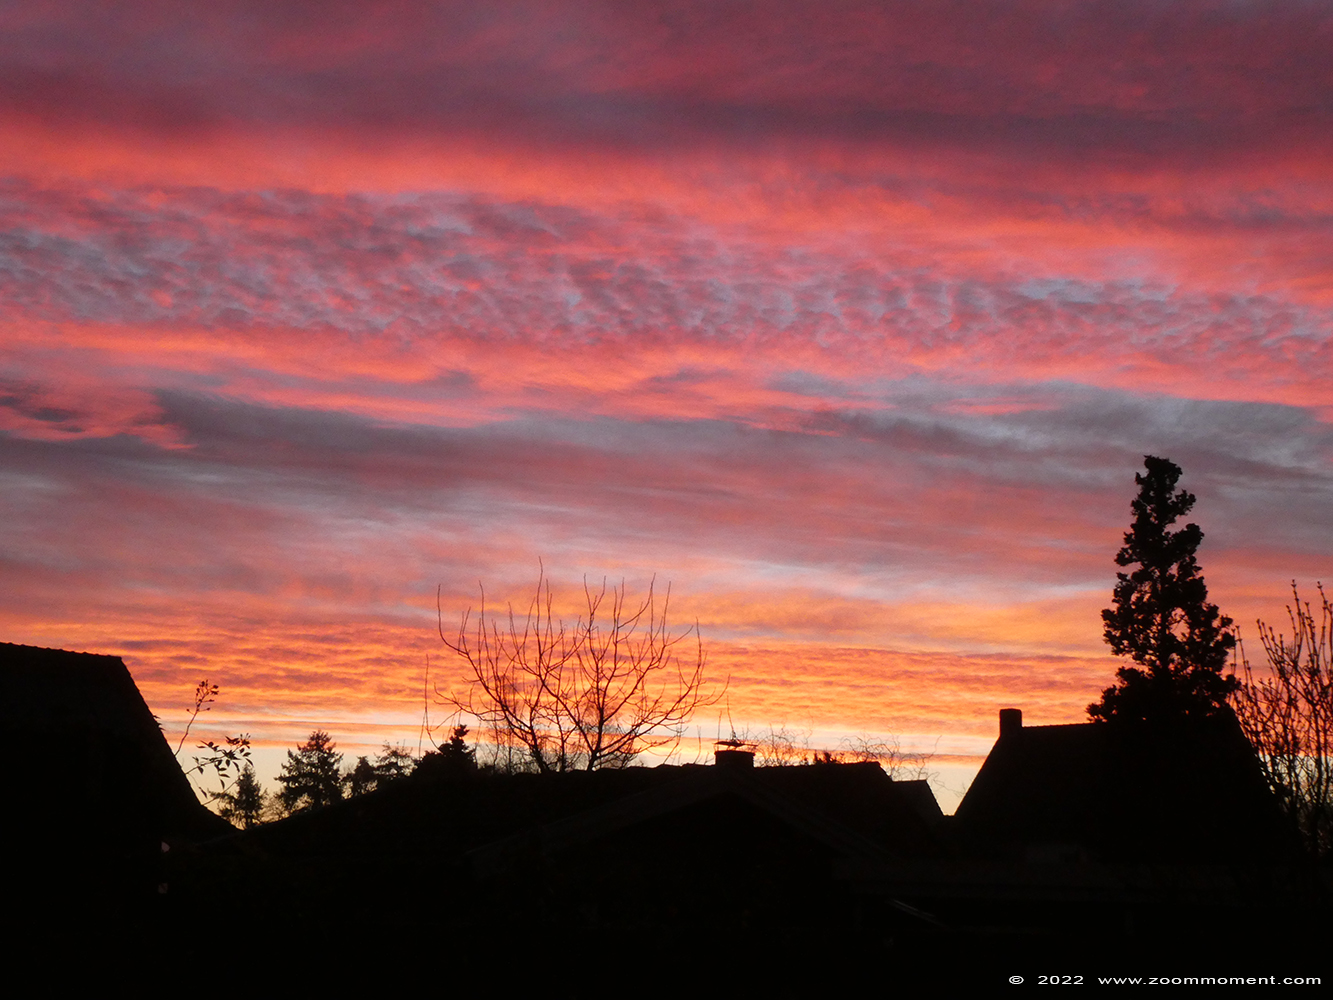 zonsopgang sunrise
Trefwoorden: Beerse Belgium zonsopgang sunrise